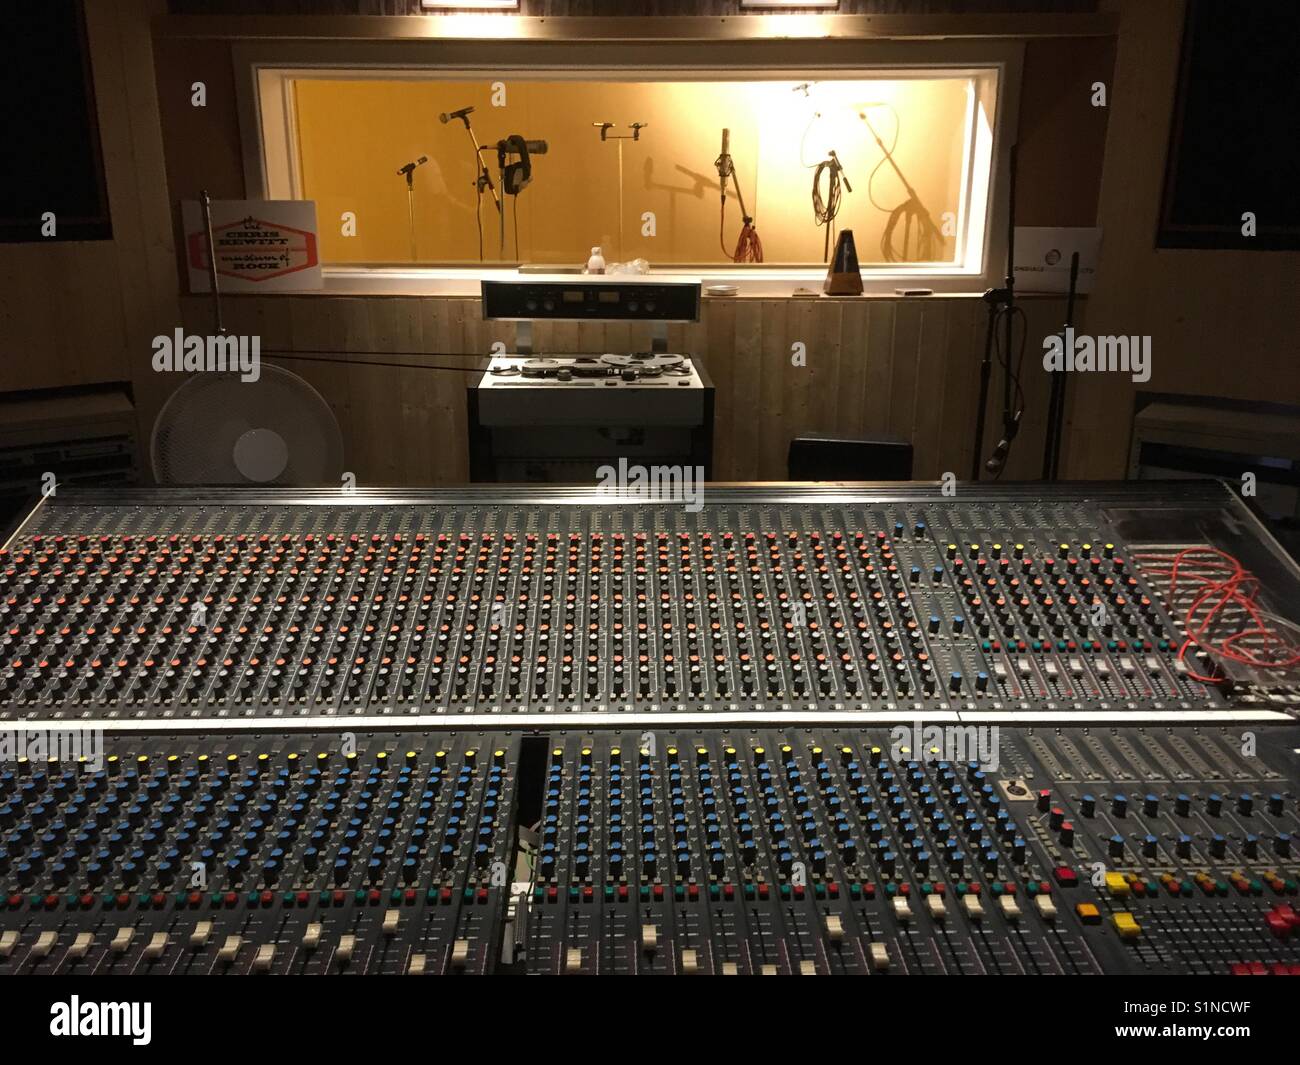 Strawberry Studios Re Creation Of Original Control Room Stockport Cheshire Using Iron Maiden S Recording Desk Stock Photo Alamy